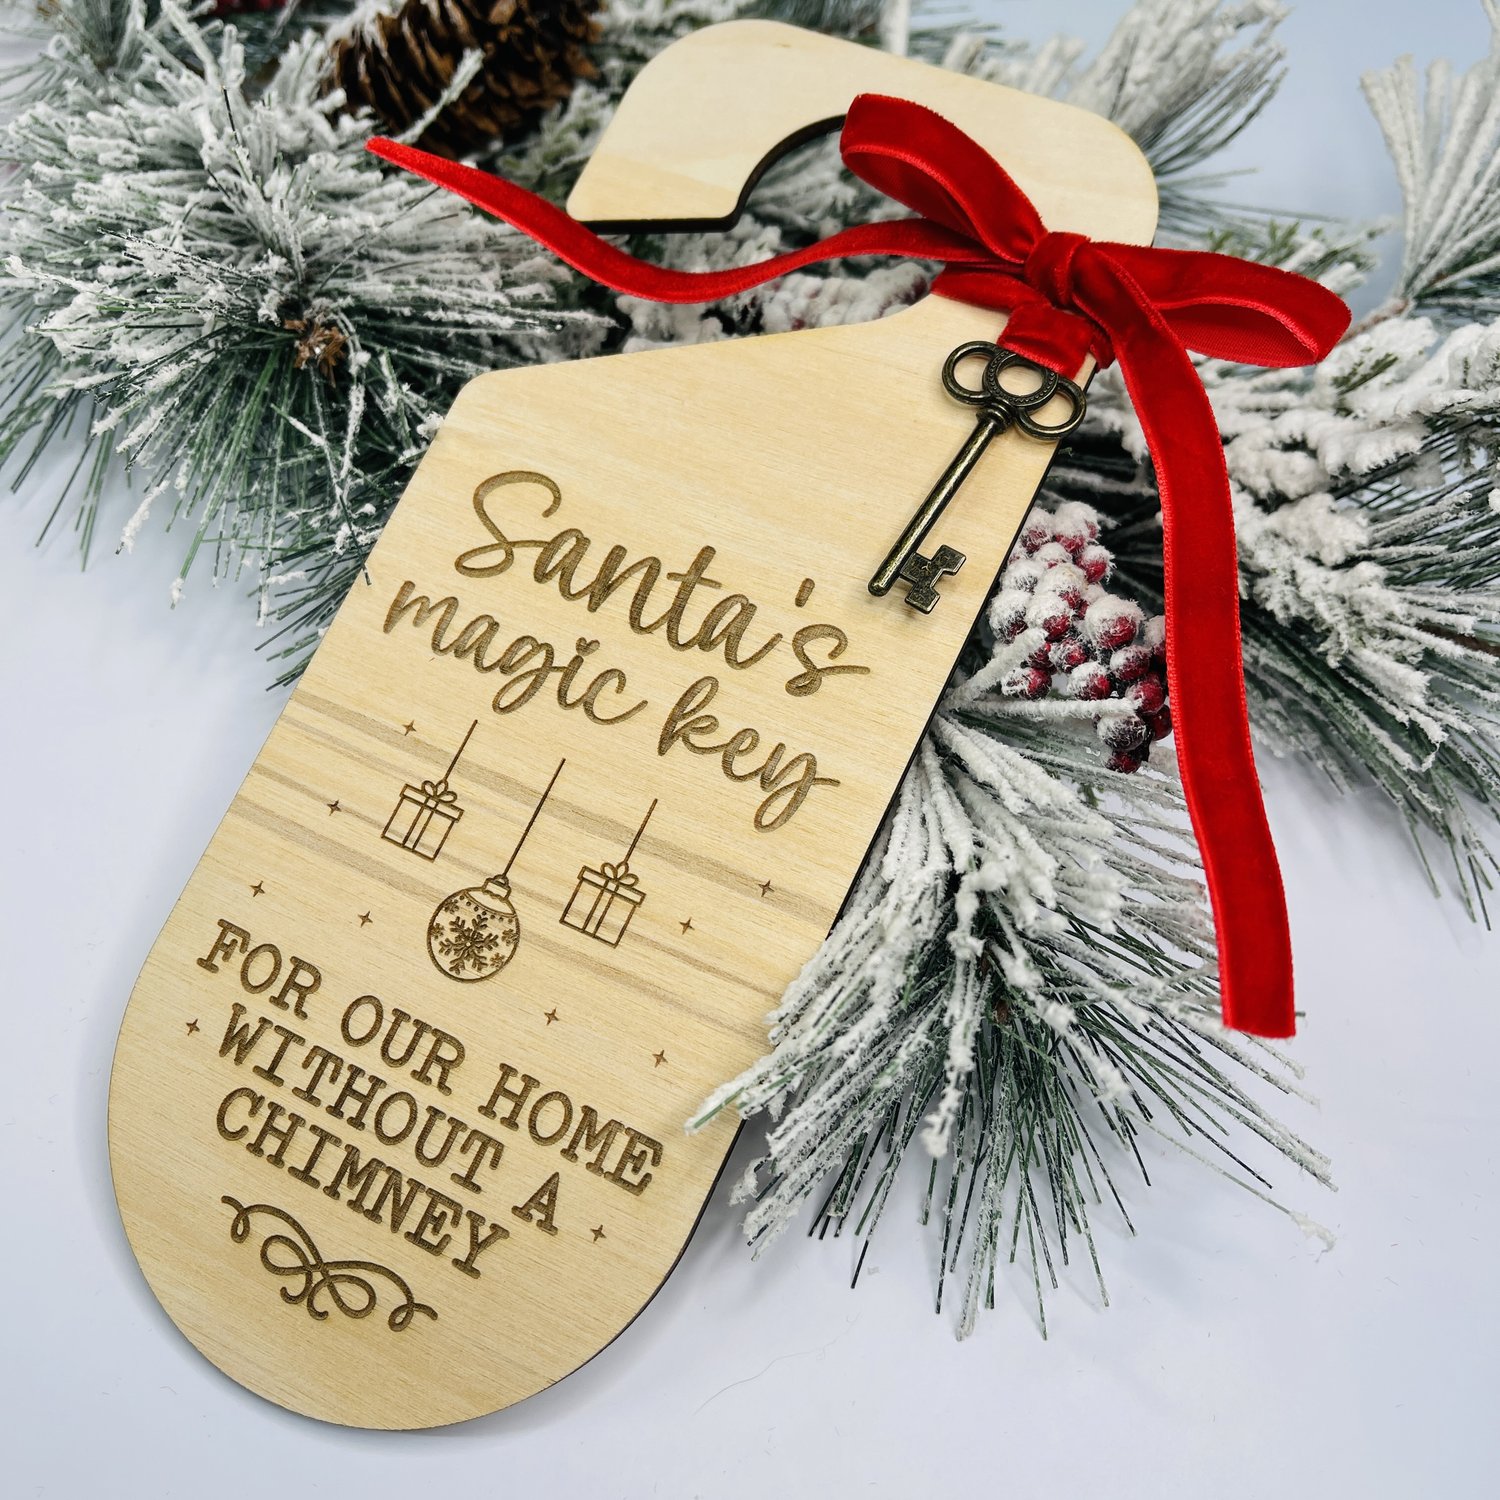  Santa Key Christmas Key Santa's Magic Key Christmas Ornament  Skeleton Key : Handmade Products